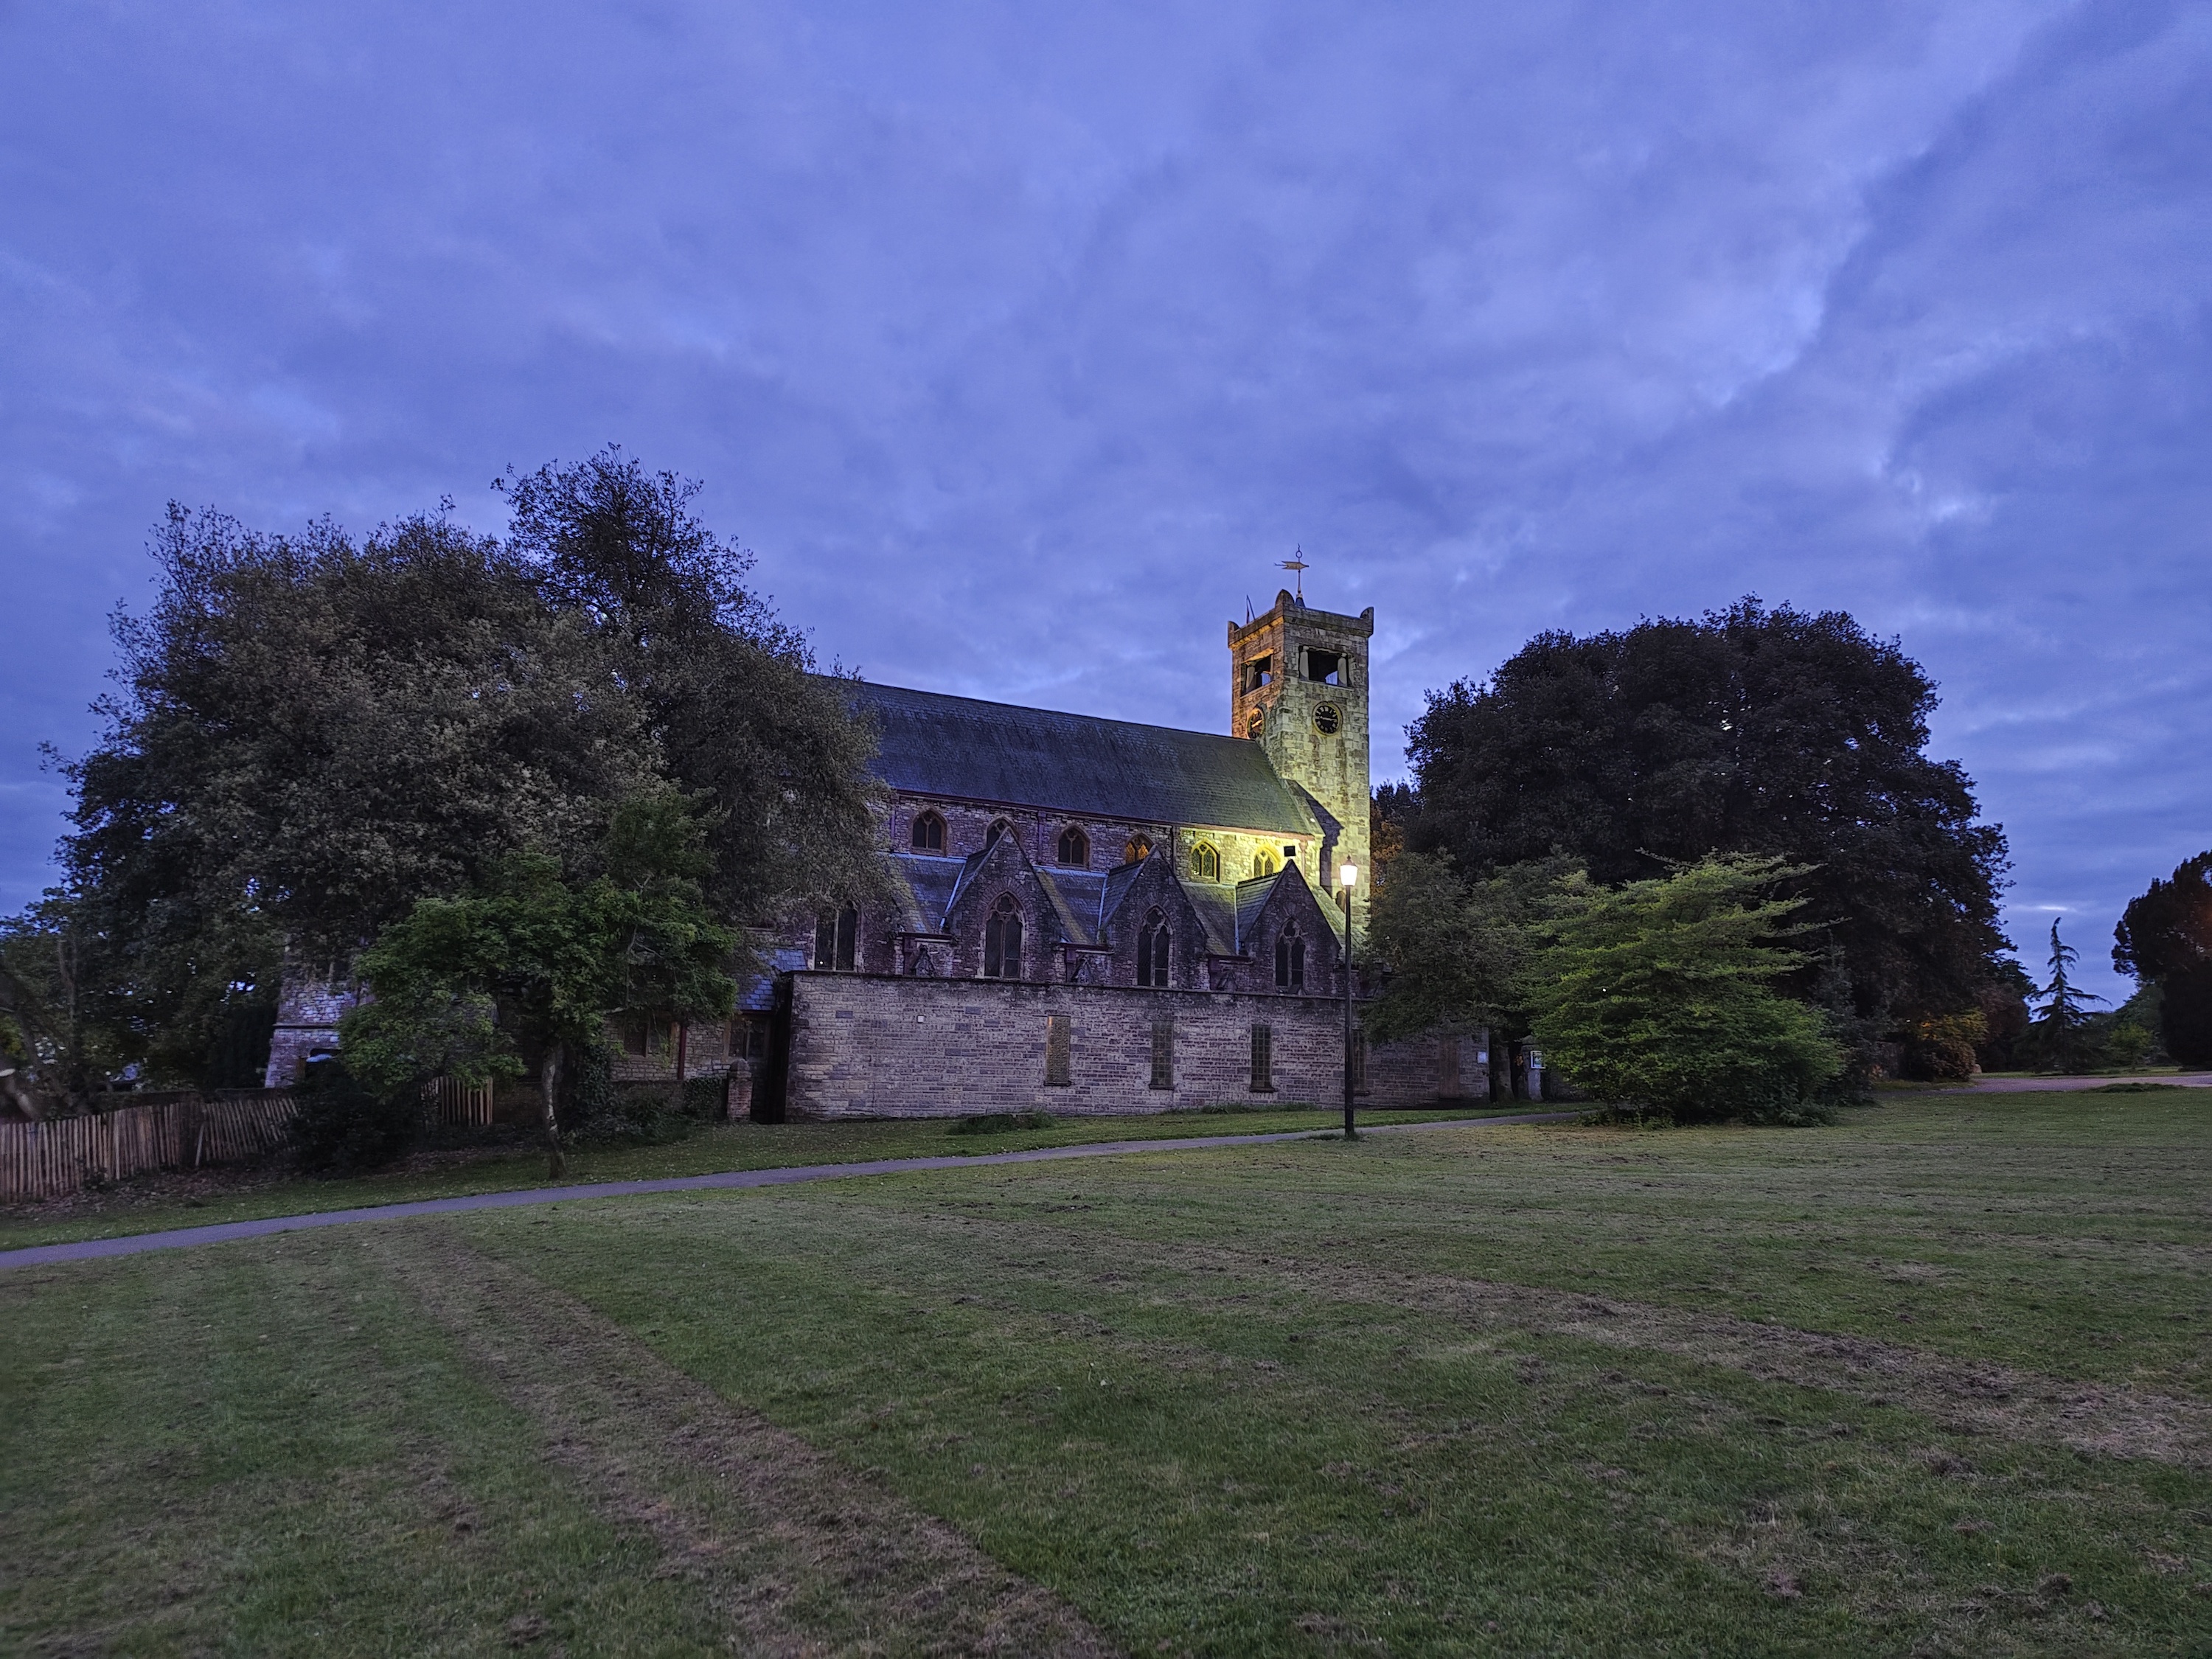 Night mode photo of a church taken with the Vivo X80 Pro.